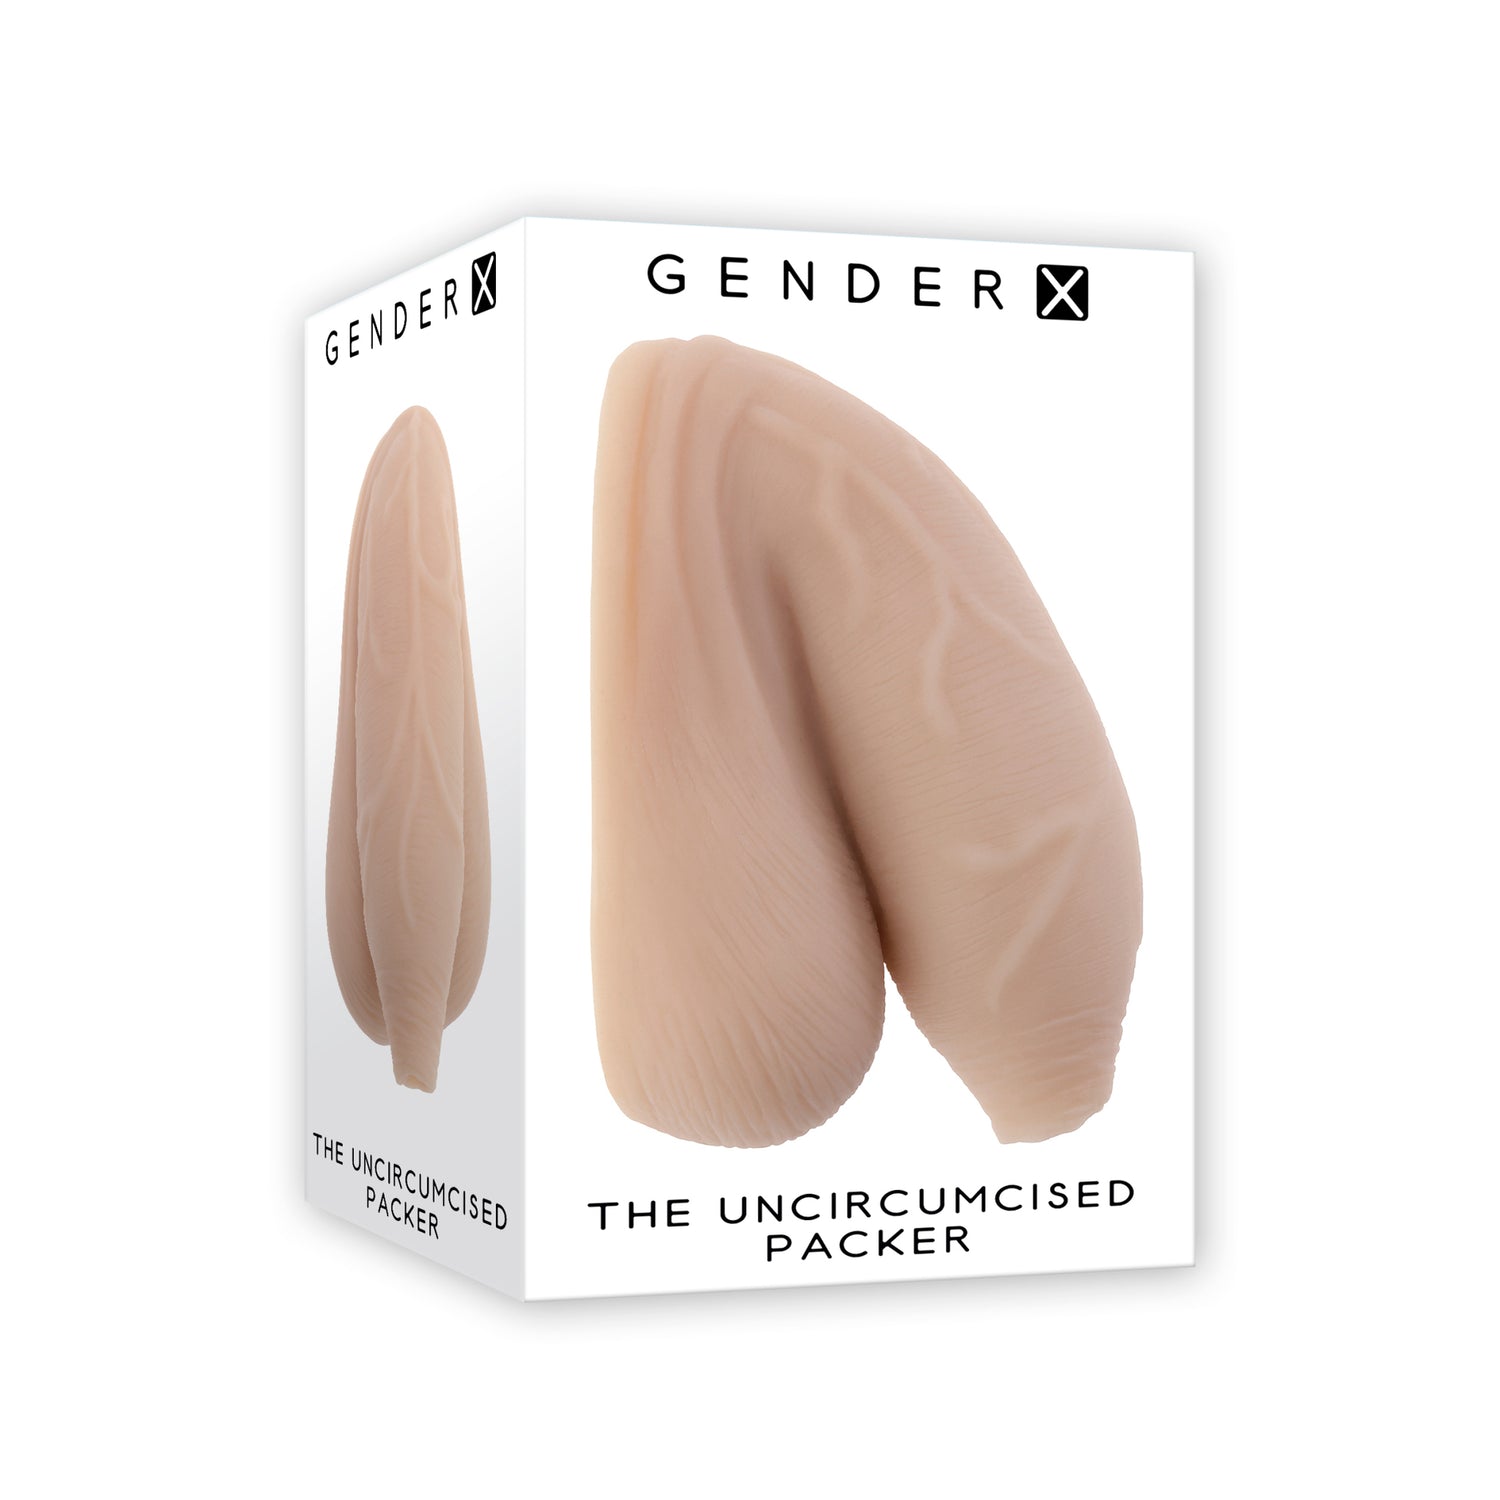 Gender-X Uncircumcised Packer - Light